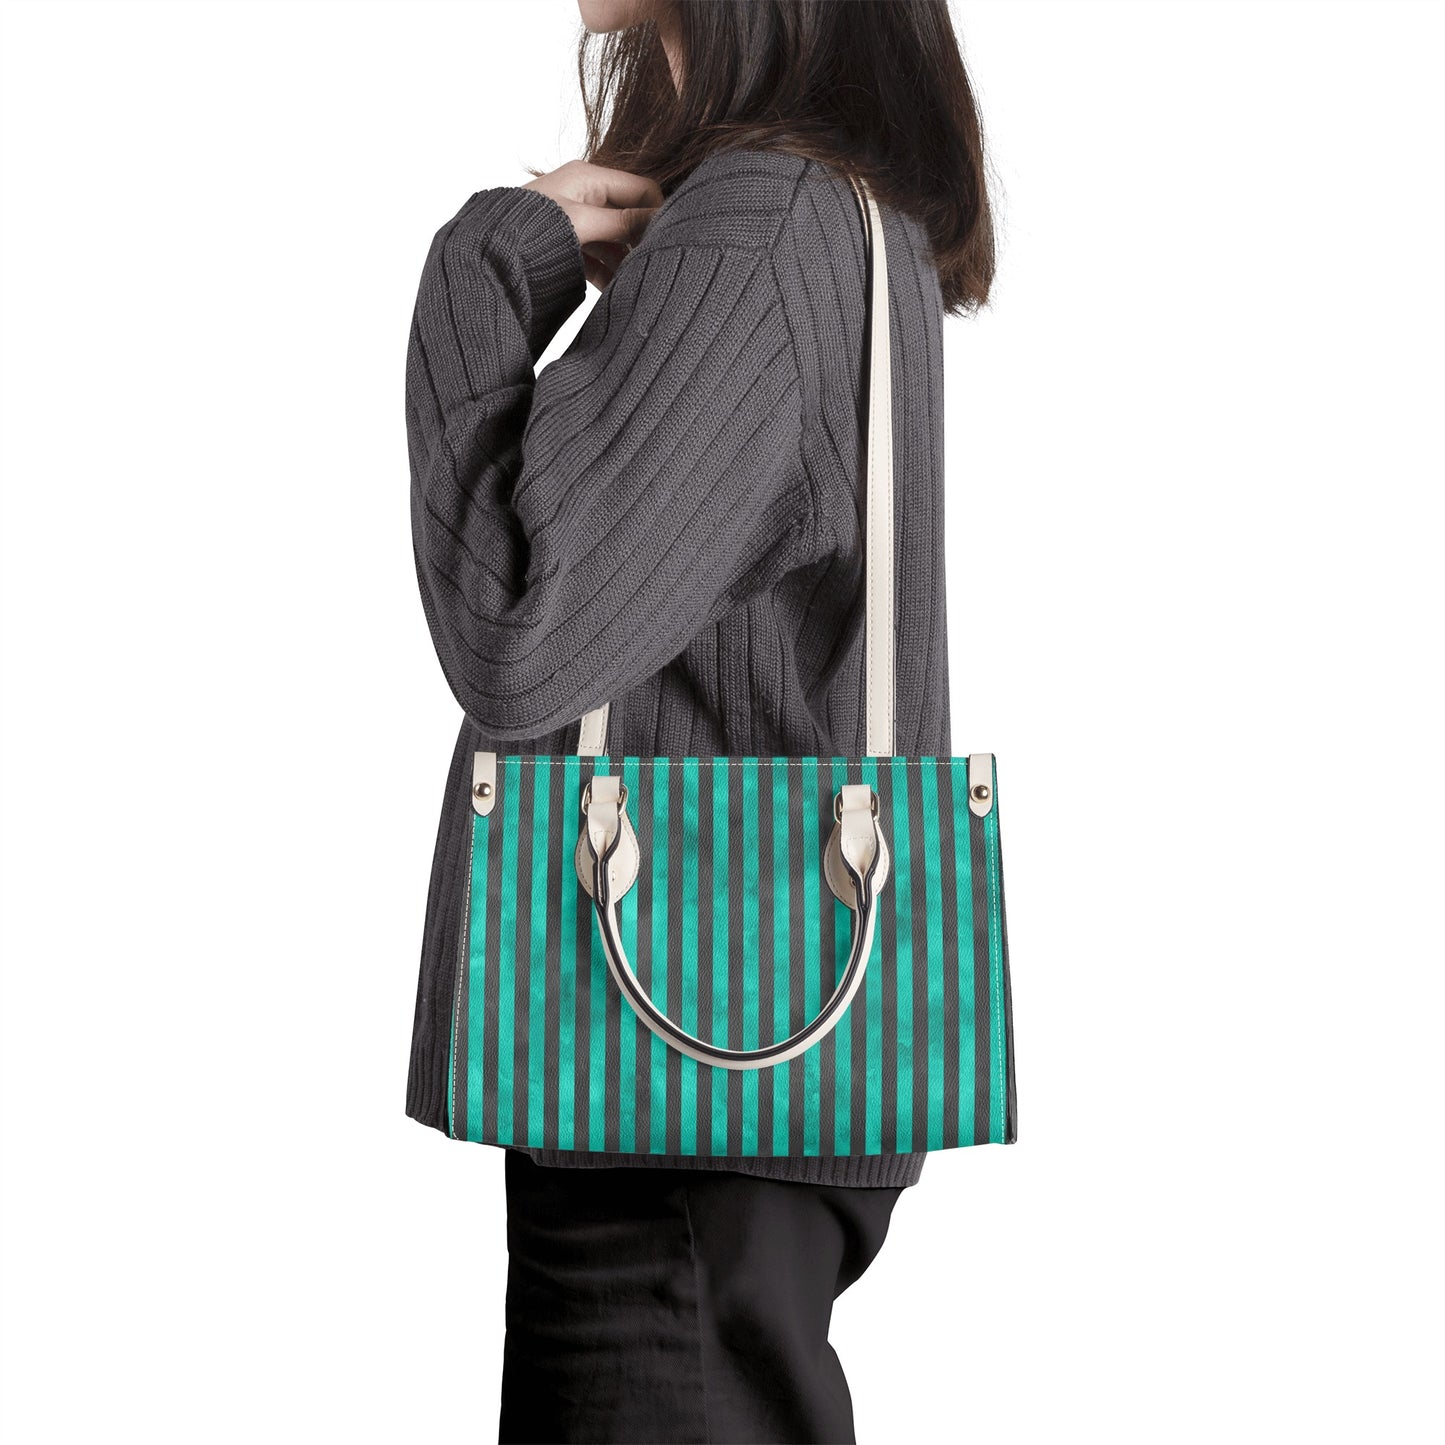 Green Striped Top Handle Women Handbag